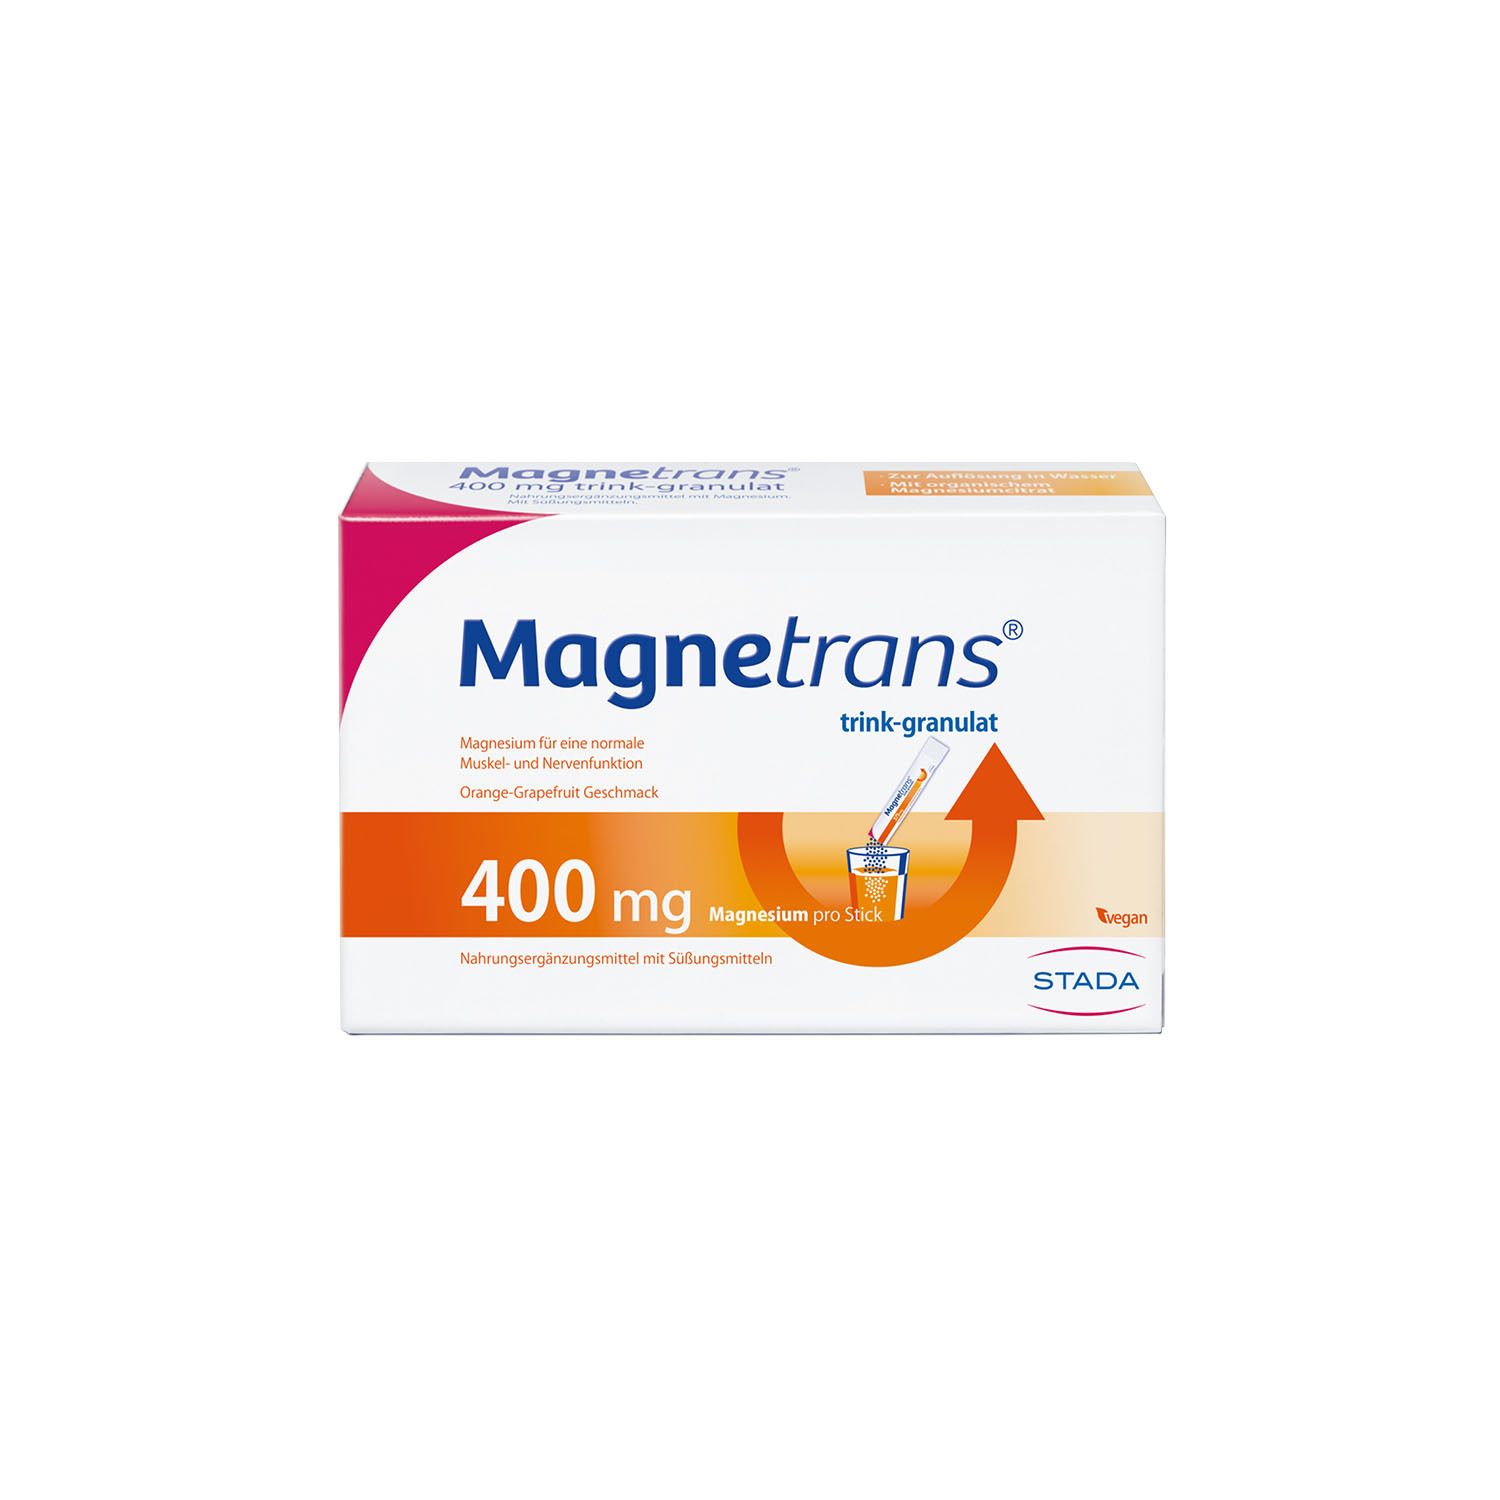 Magnetrans® 400 mg Magnesium trink-granulat